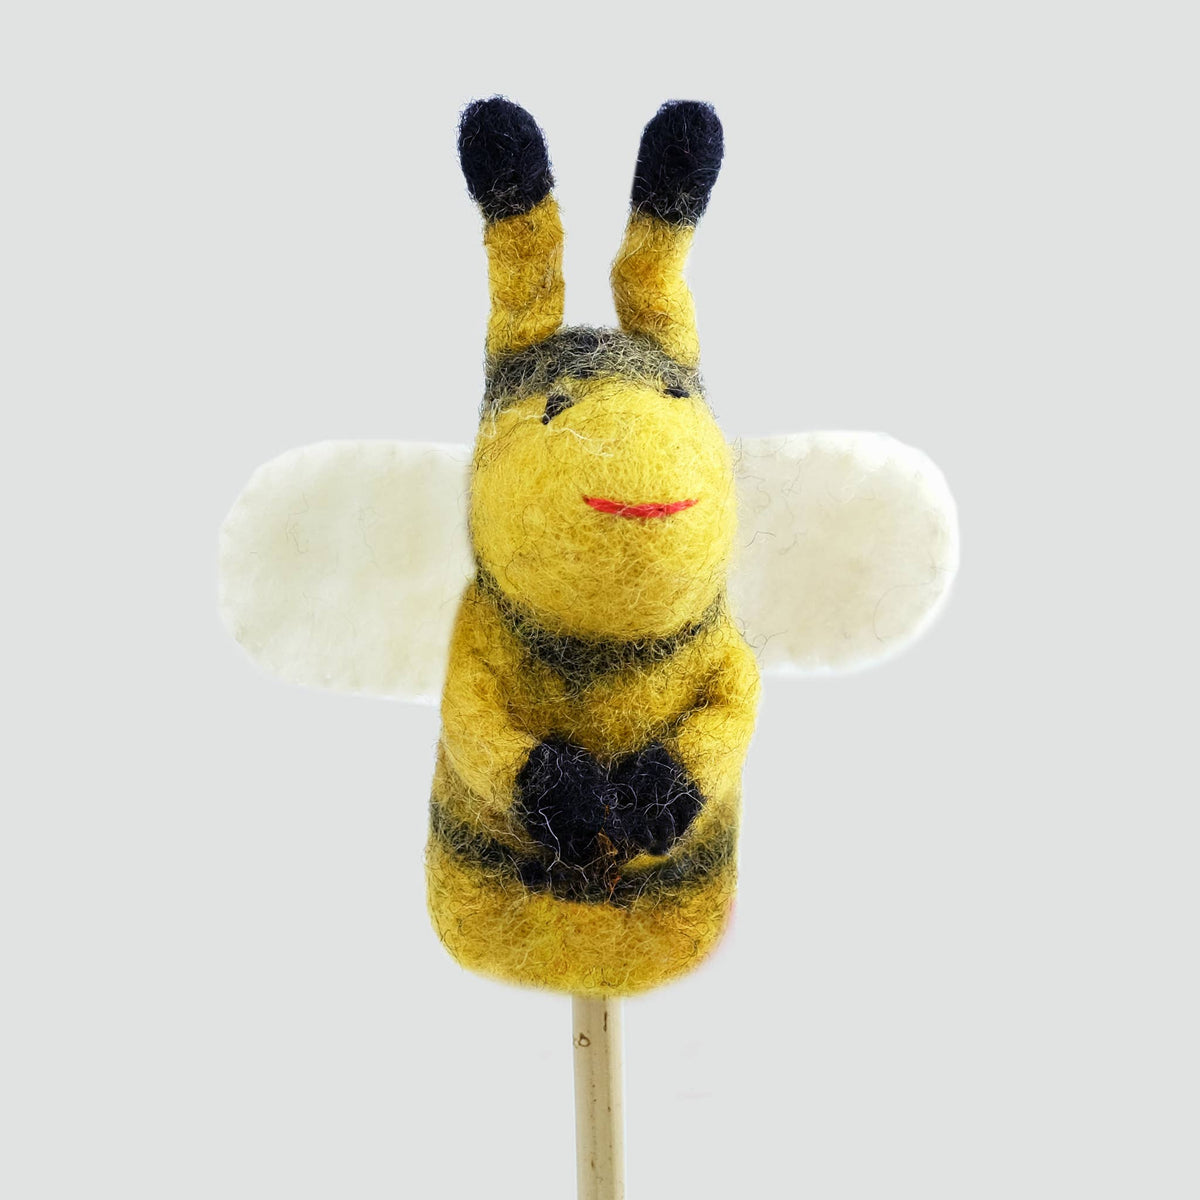 Bee Finger Puppet